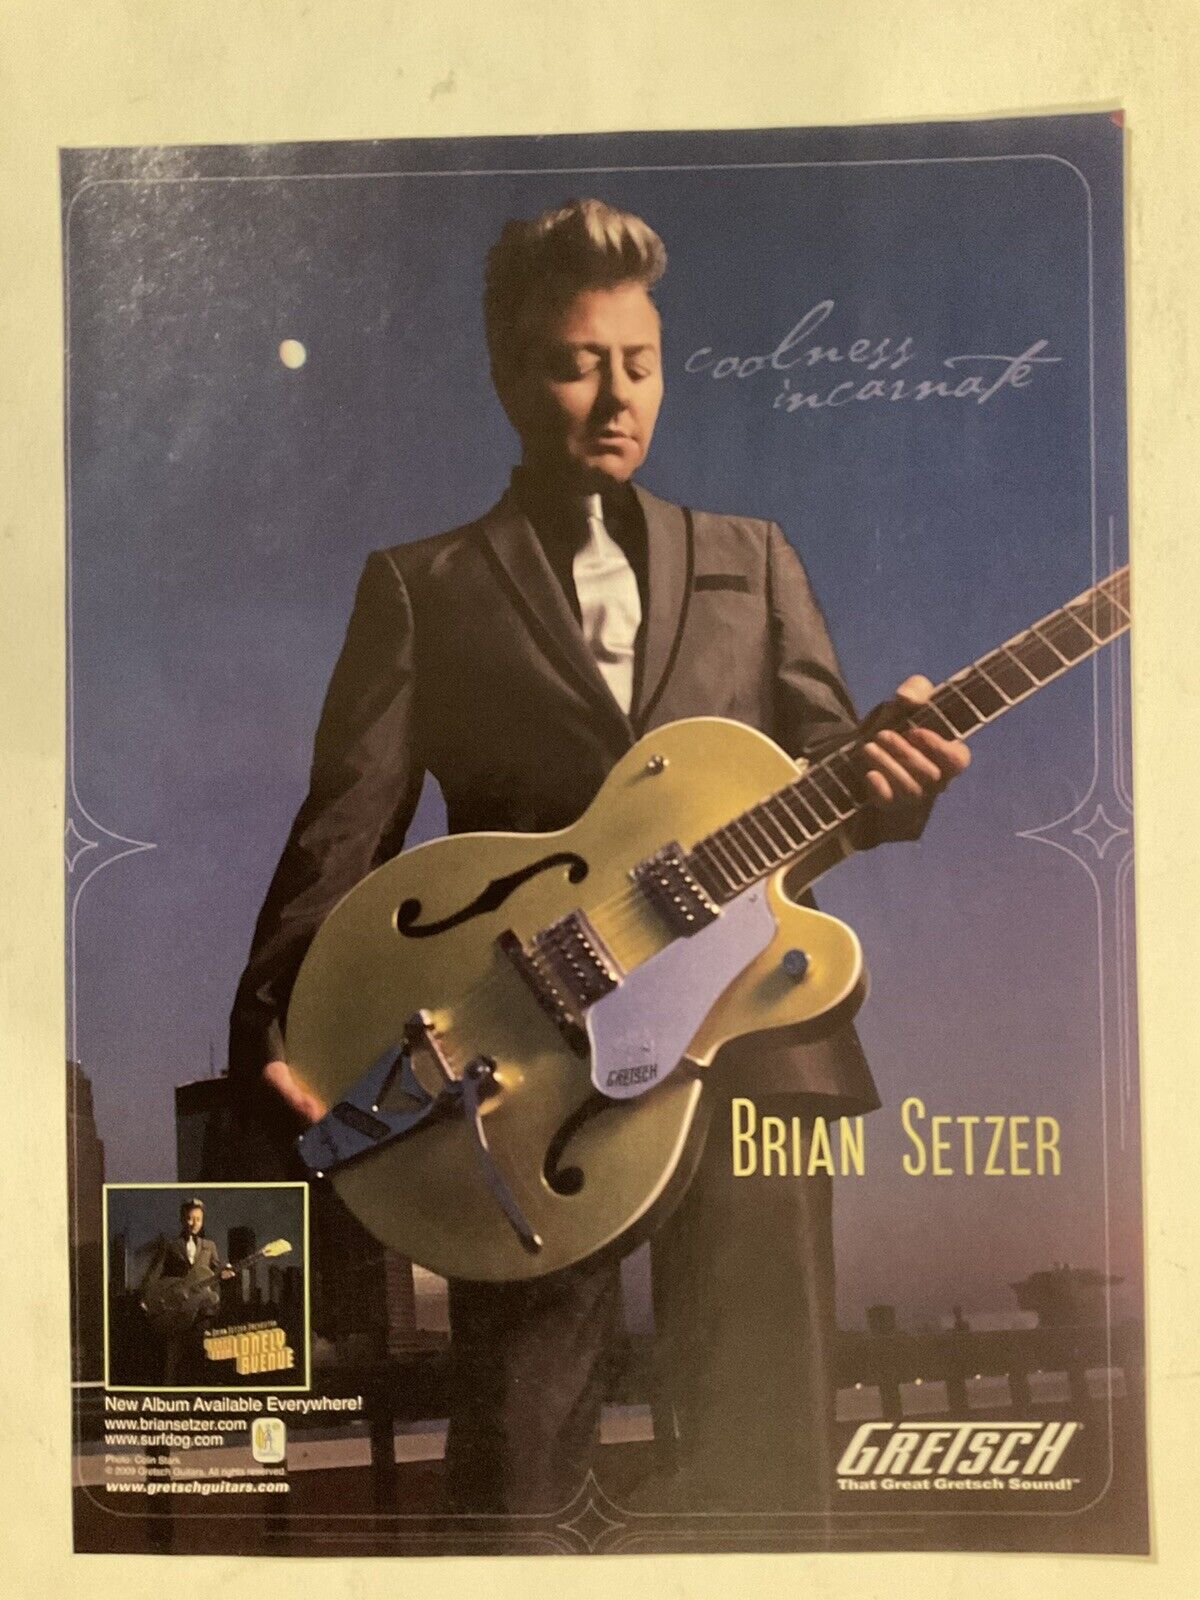 Brian Setzer Gretsch Guitar Print Ad 2010 Photo Stray Cats Lonely Ave VTG 10-1